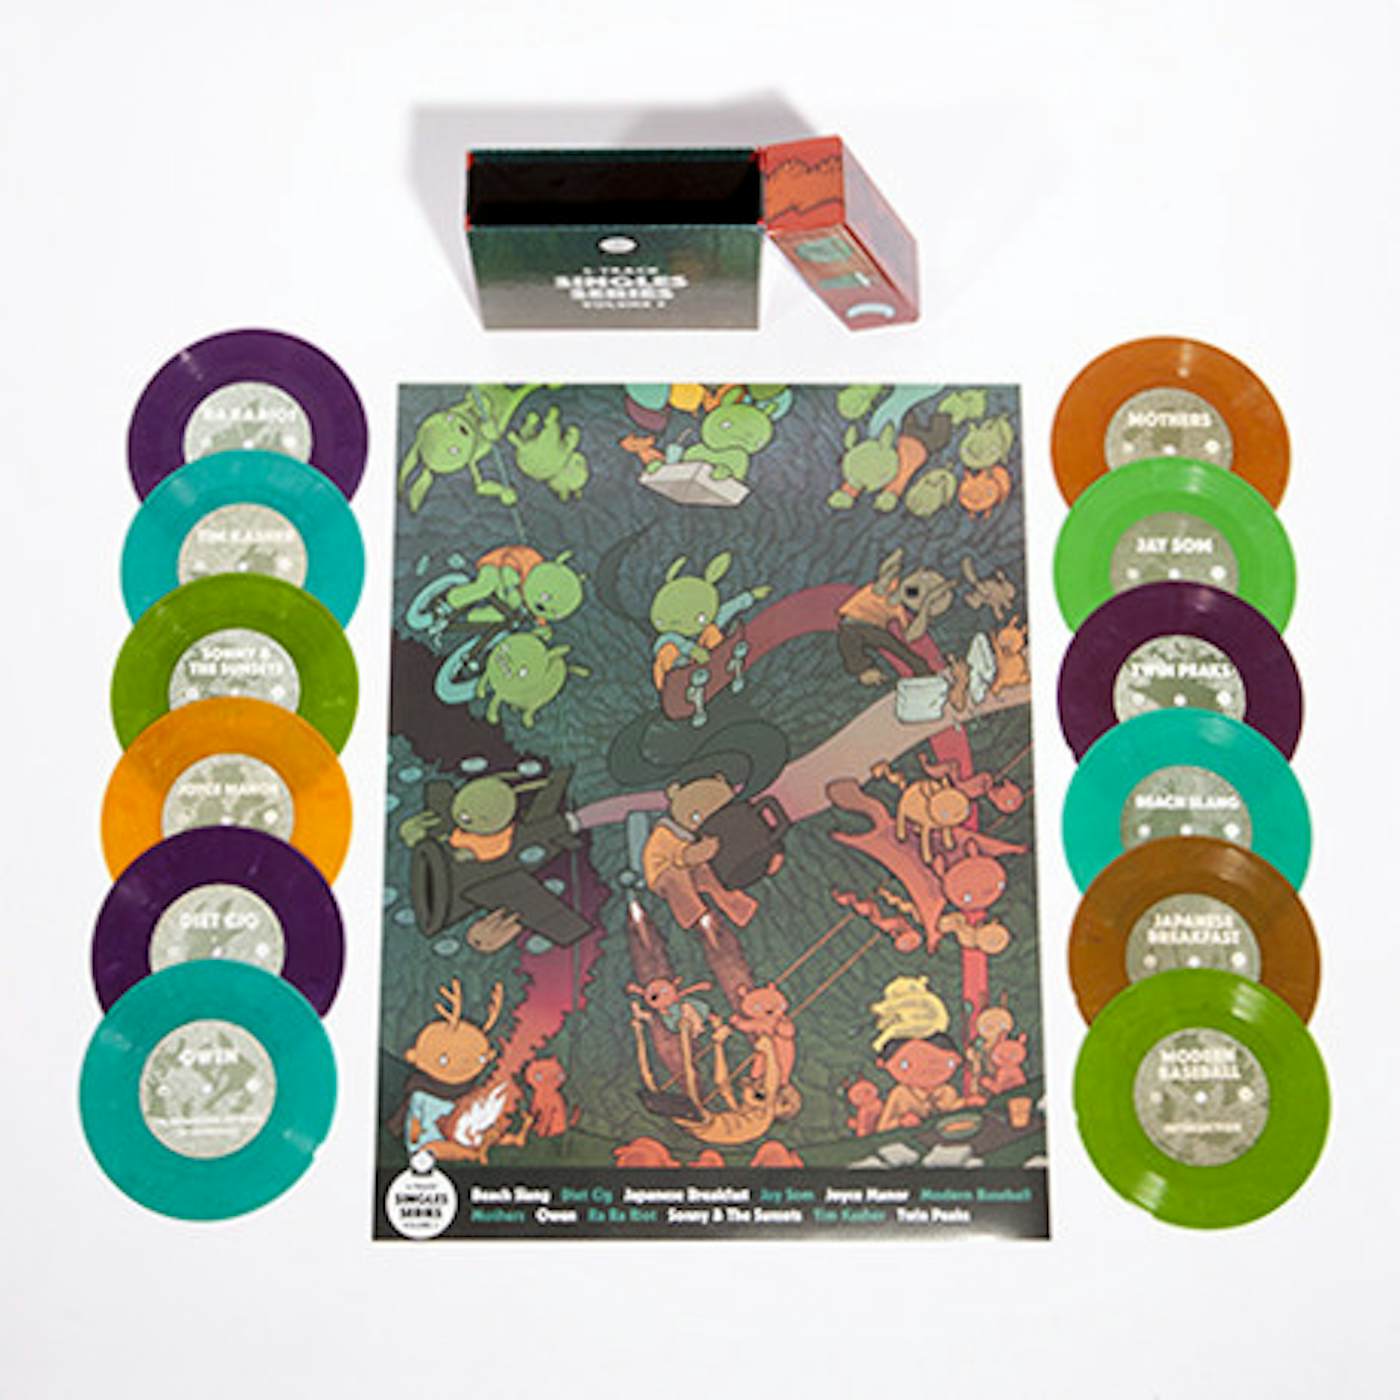 Jay Som Polyvinyl 4-Track Singles Series Vol. 3 COMPLETE BOX SET (Garage Sale)